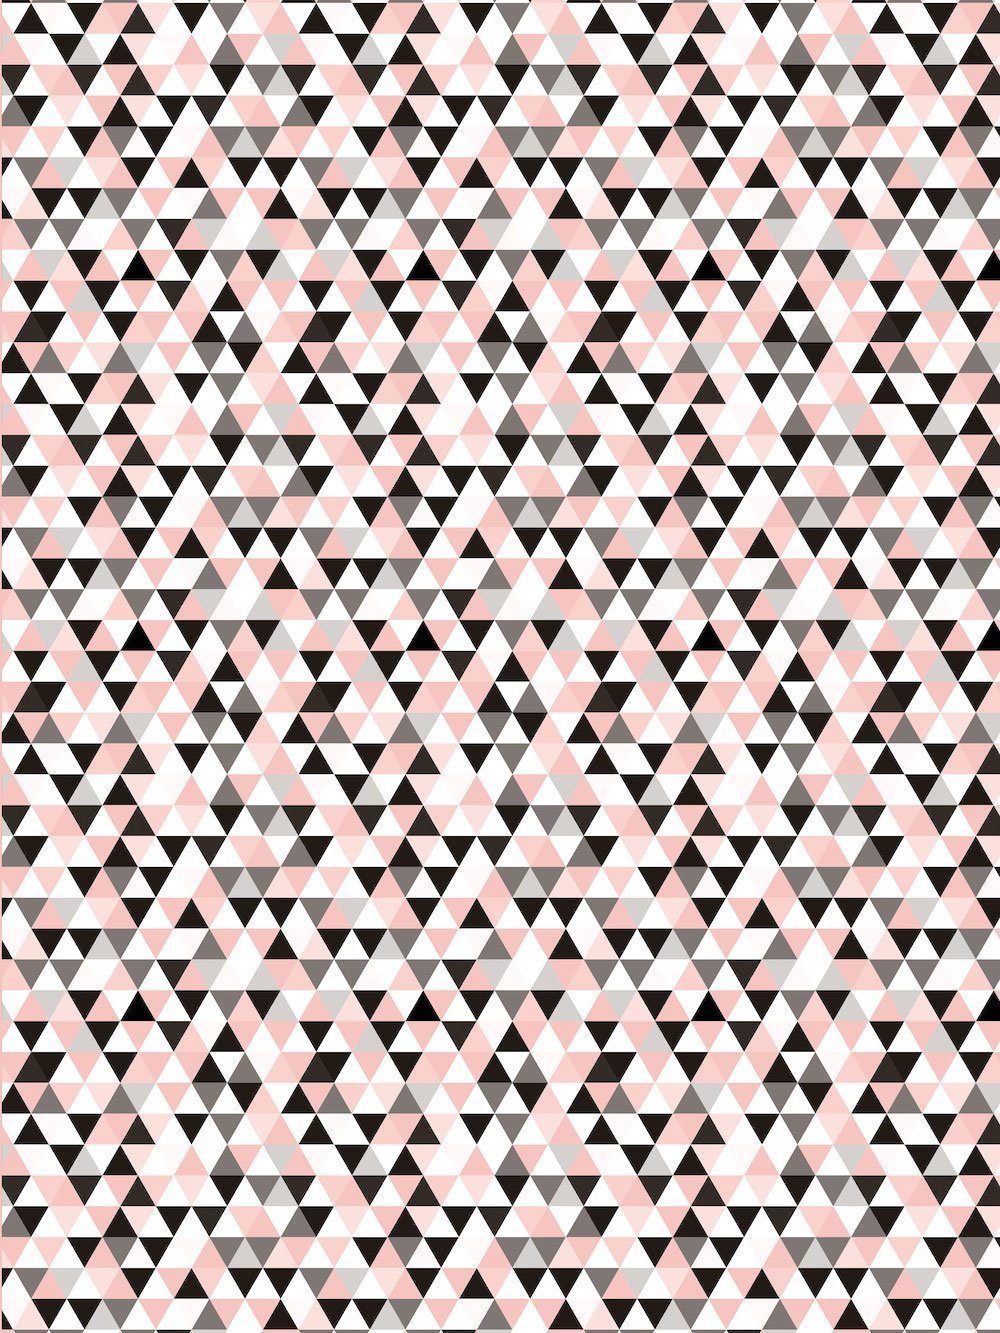 30 Dreiecke Décopatch-Papier x H-Erzmade 699 lachs/schwarz, Zeichenpapier